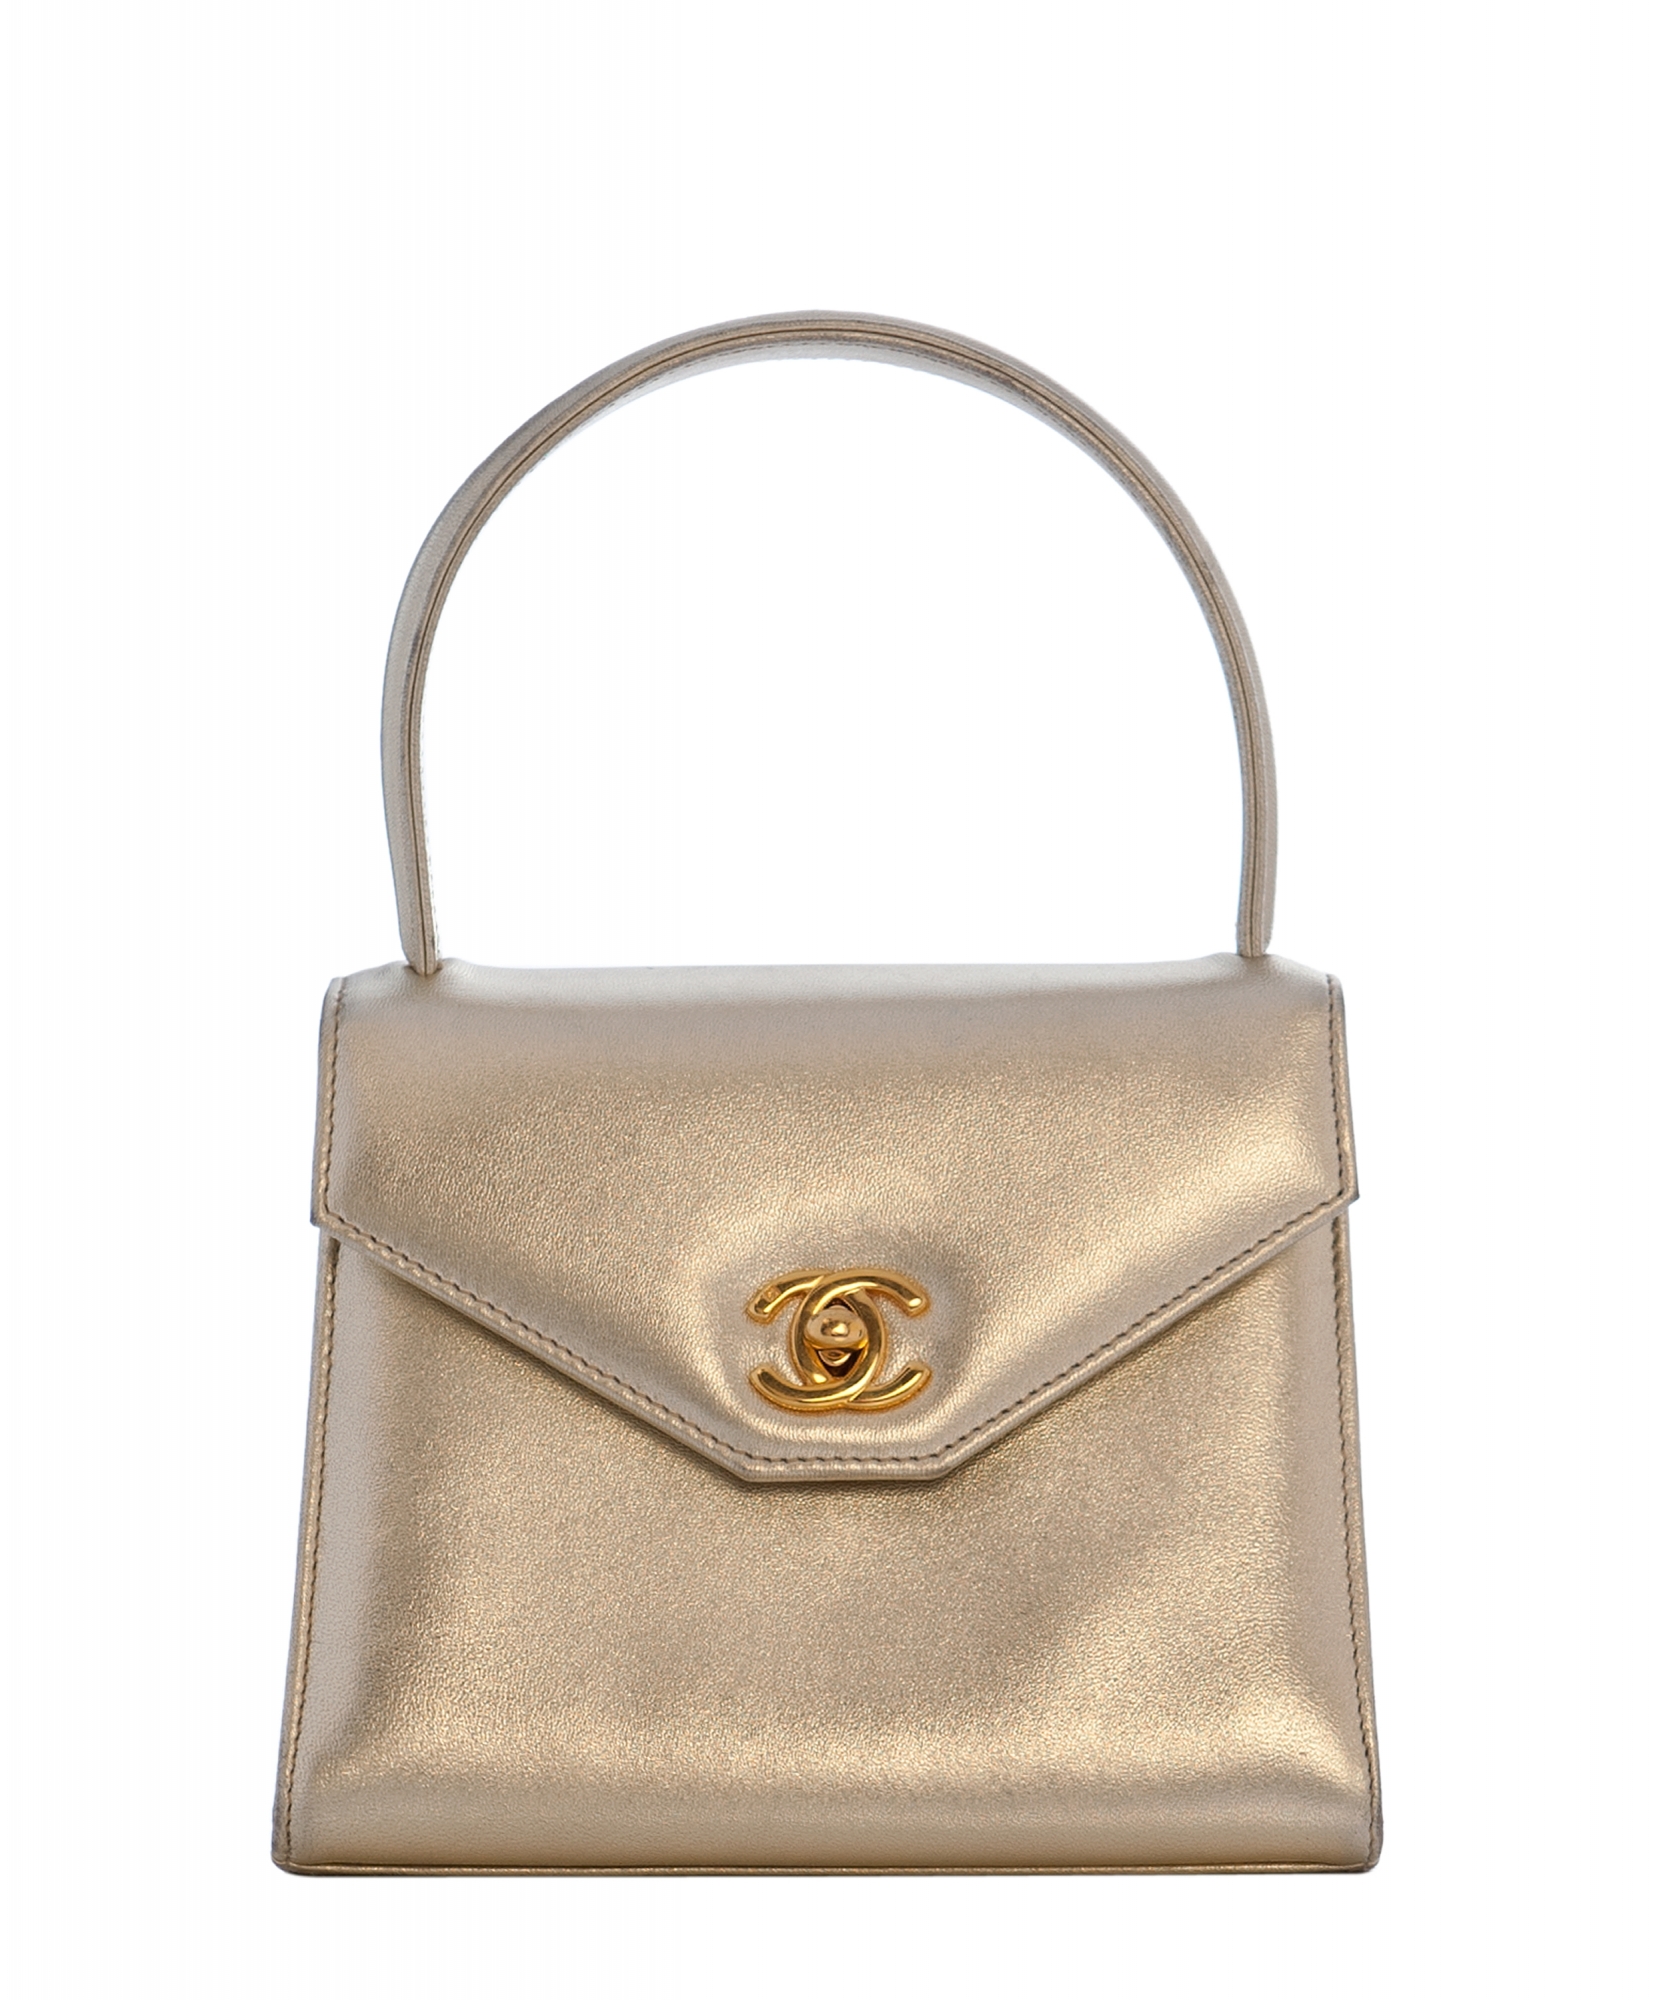 Chanel Metallic Gold Leather Mini Kelly Flap Bag - Chanel